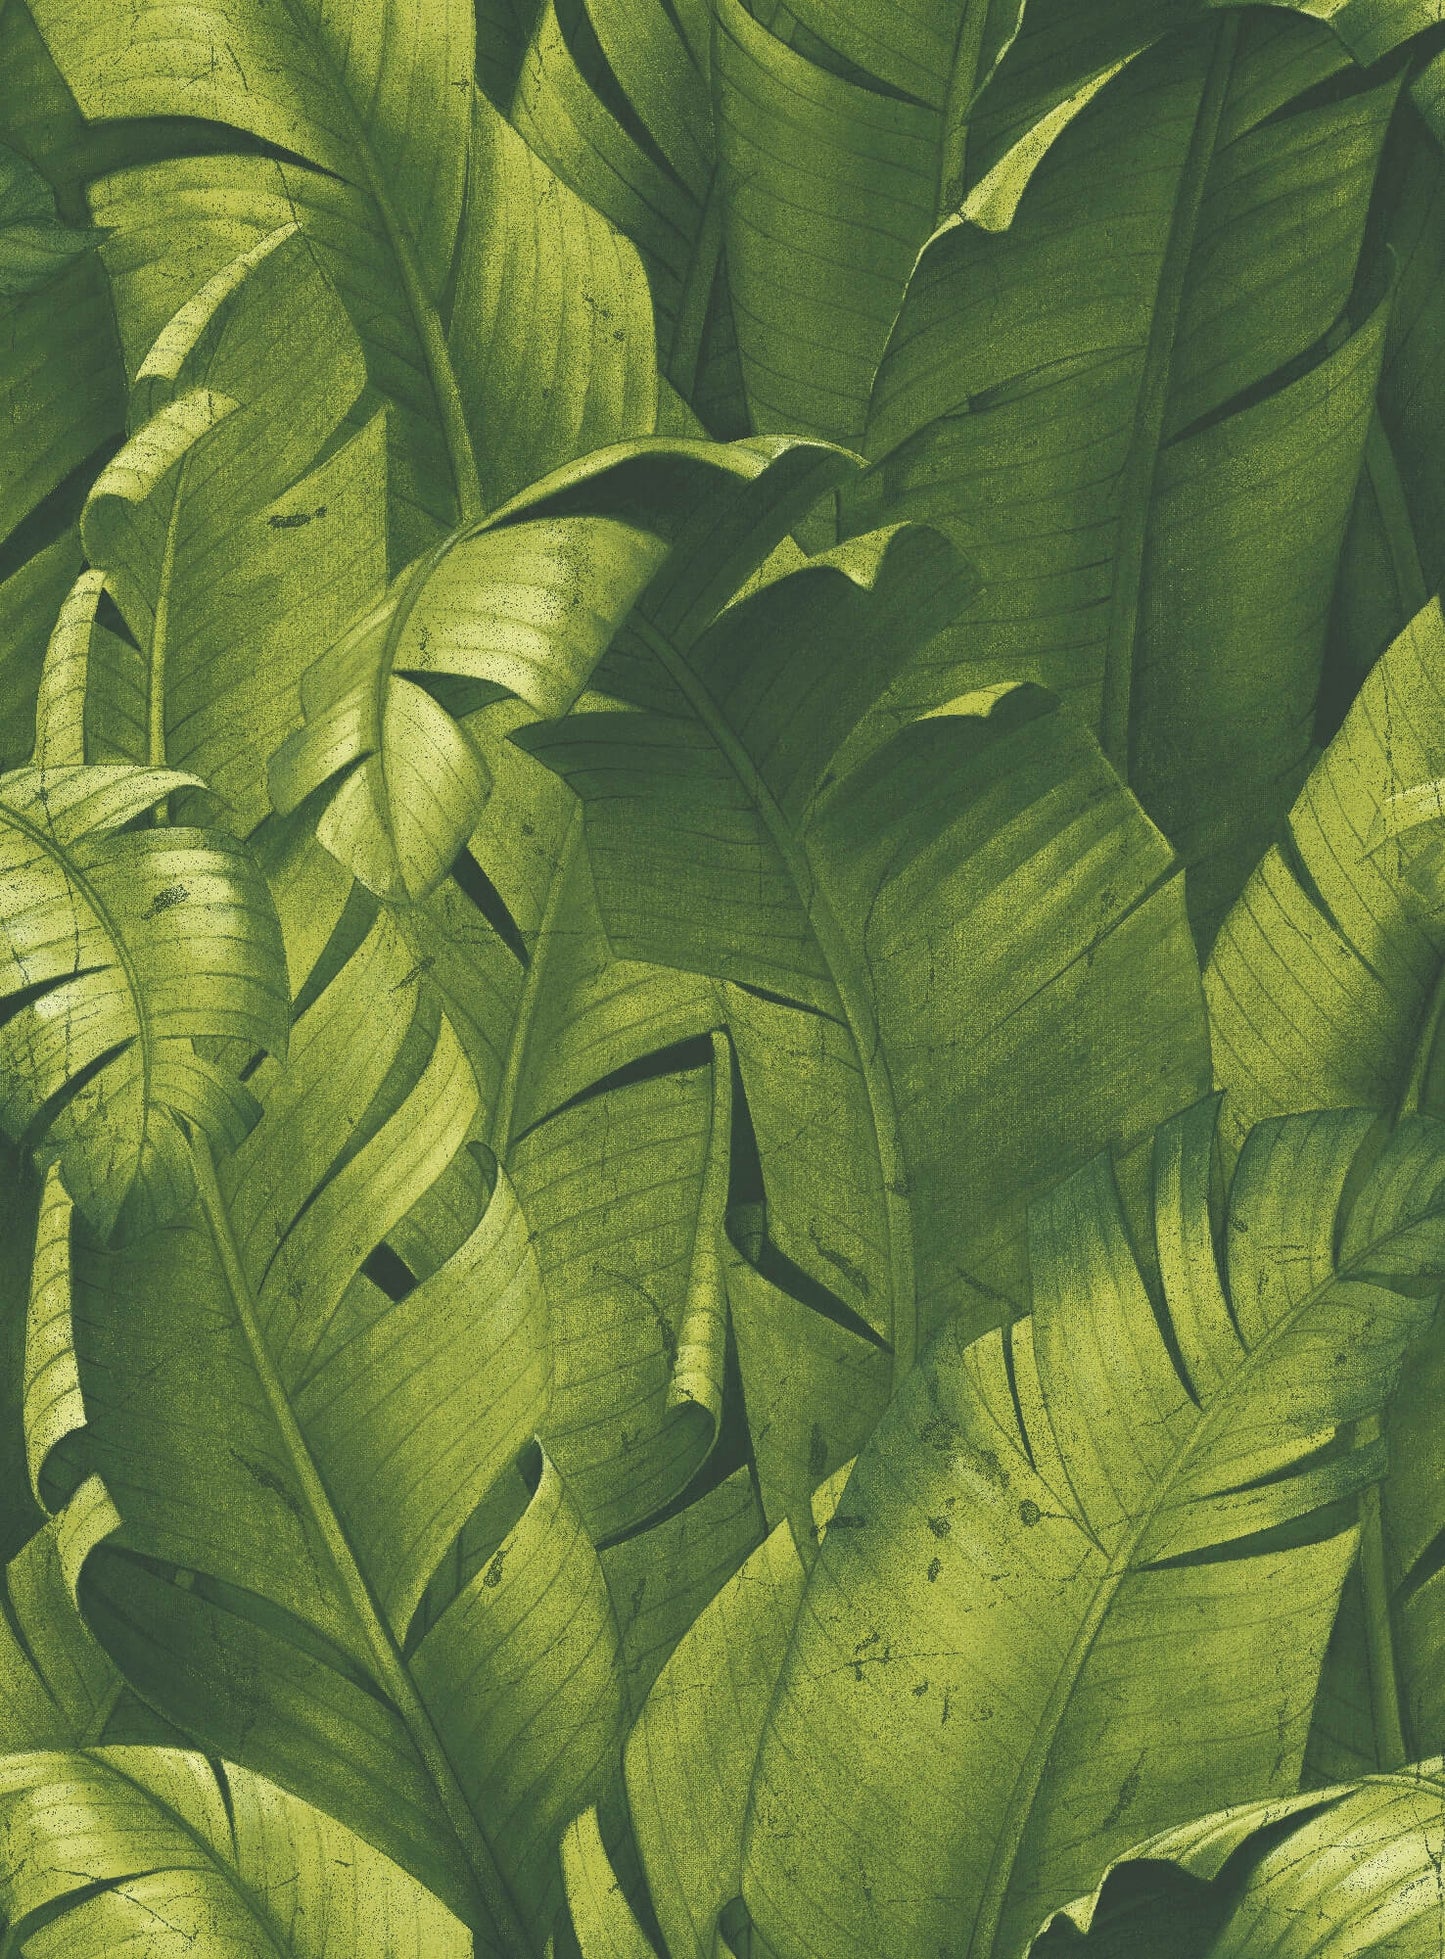 NextWall Tropical Banana Leaves Peel and Stick Wallpaper - SAMPLE